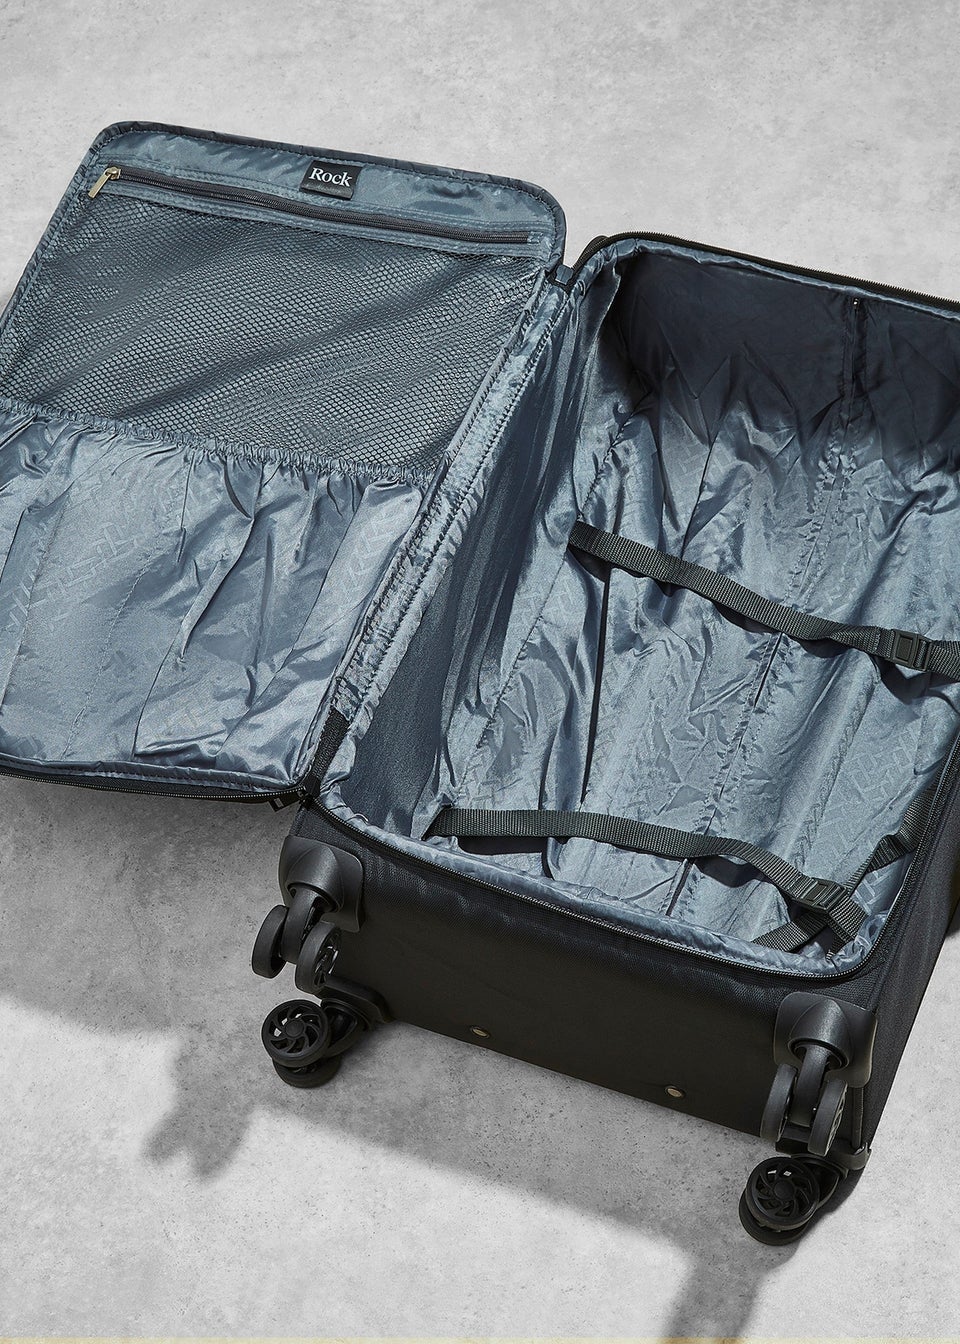 Rock Black/Blue Pegasus Suitcase